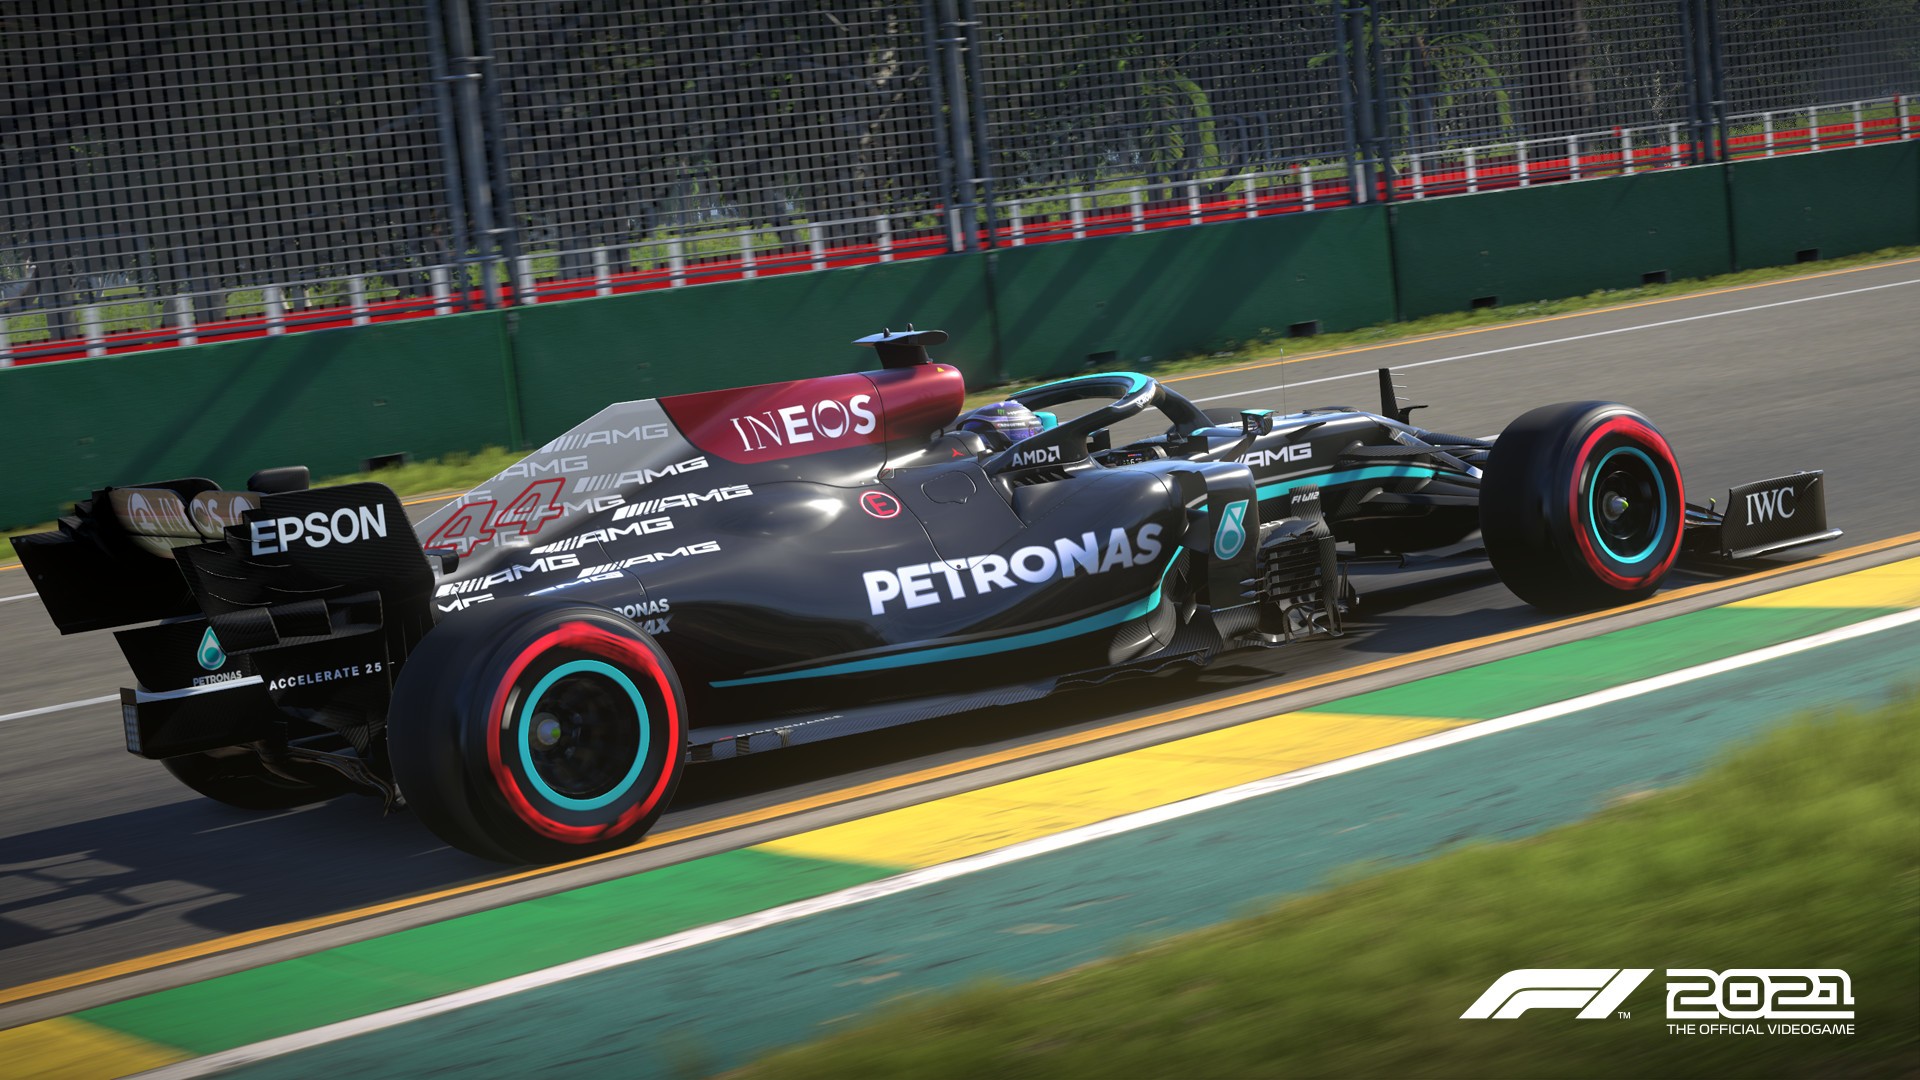 F1 2021 Adds Portuguese Grand Prix in Latest Update, Imola Is Next